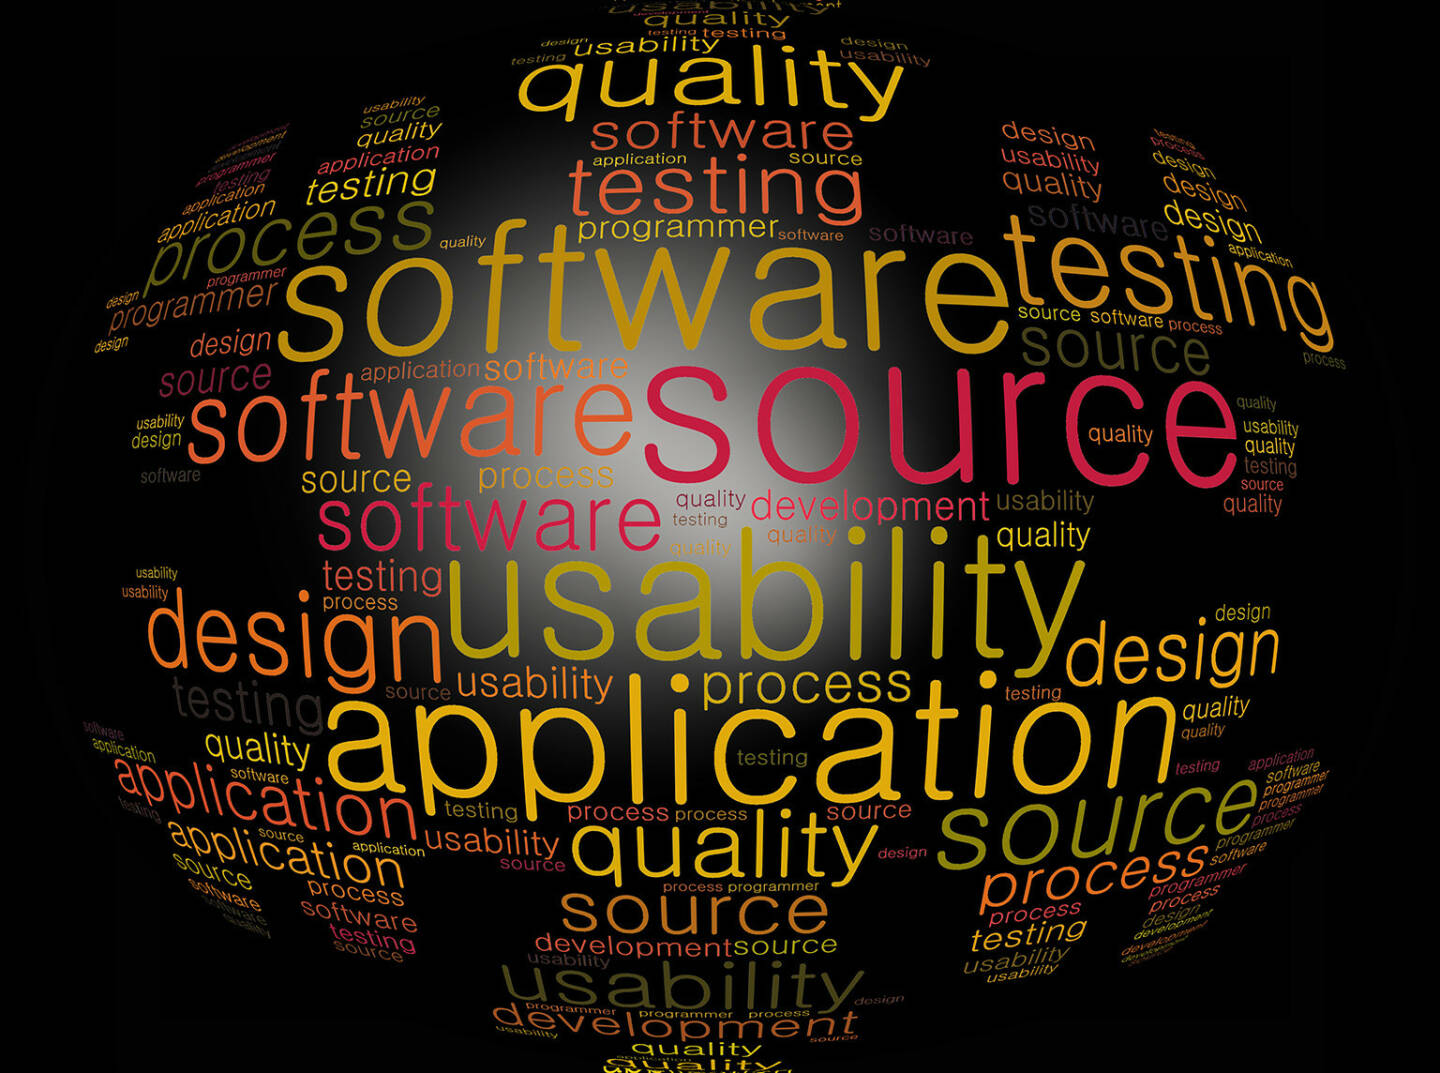 Software, Source, Application, Usability, Design, http://www.shutterstock.com/de/pic-177987131/stock-photo-software-word-cloud.html